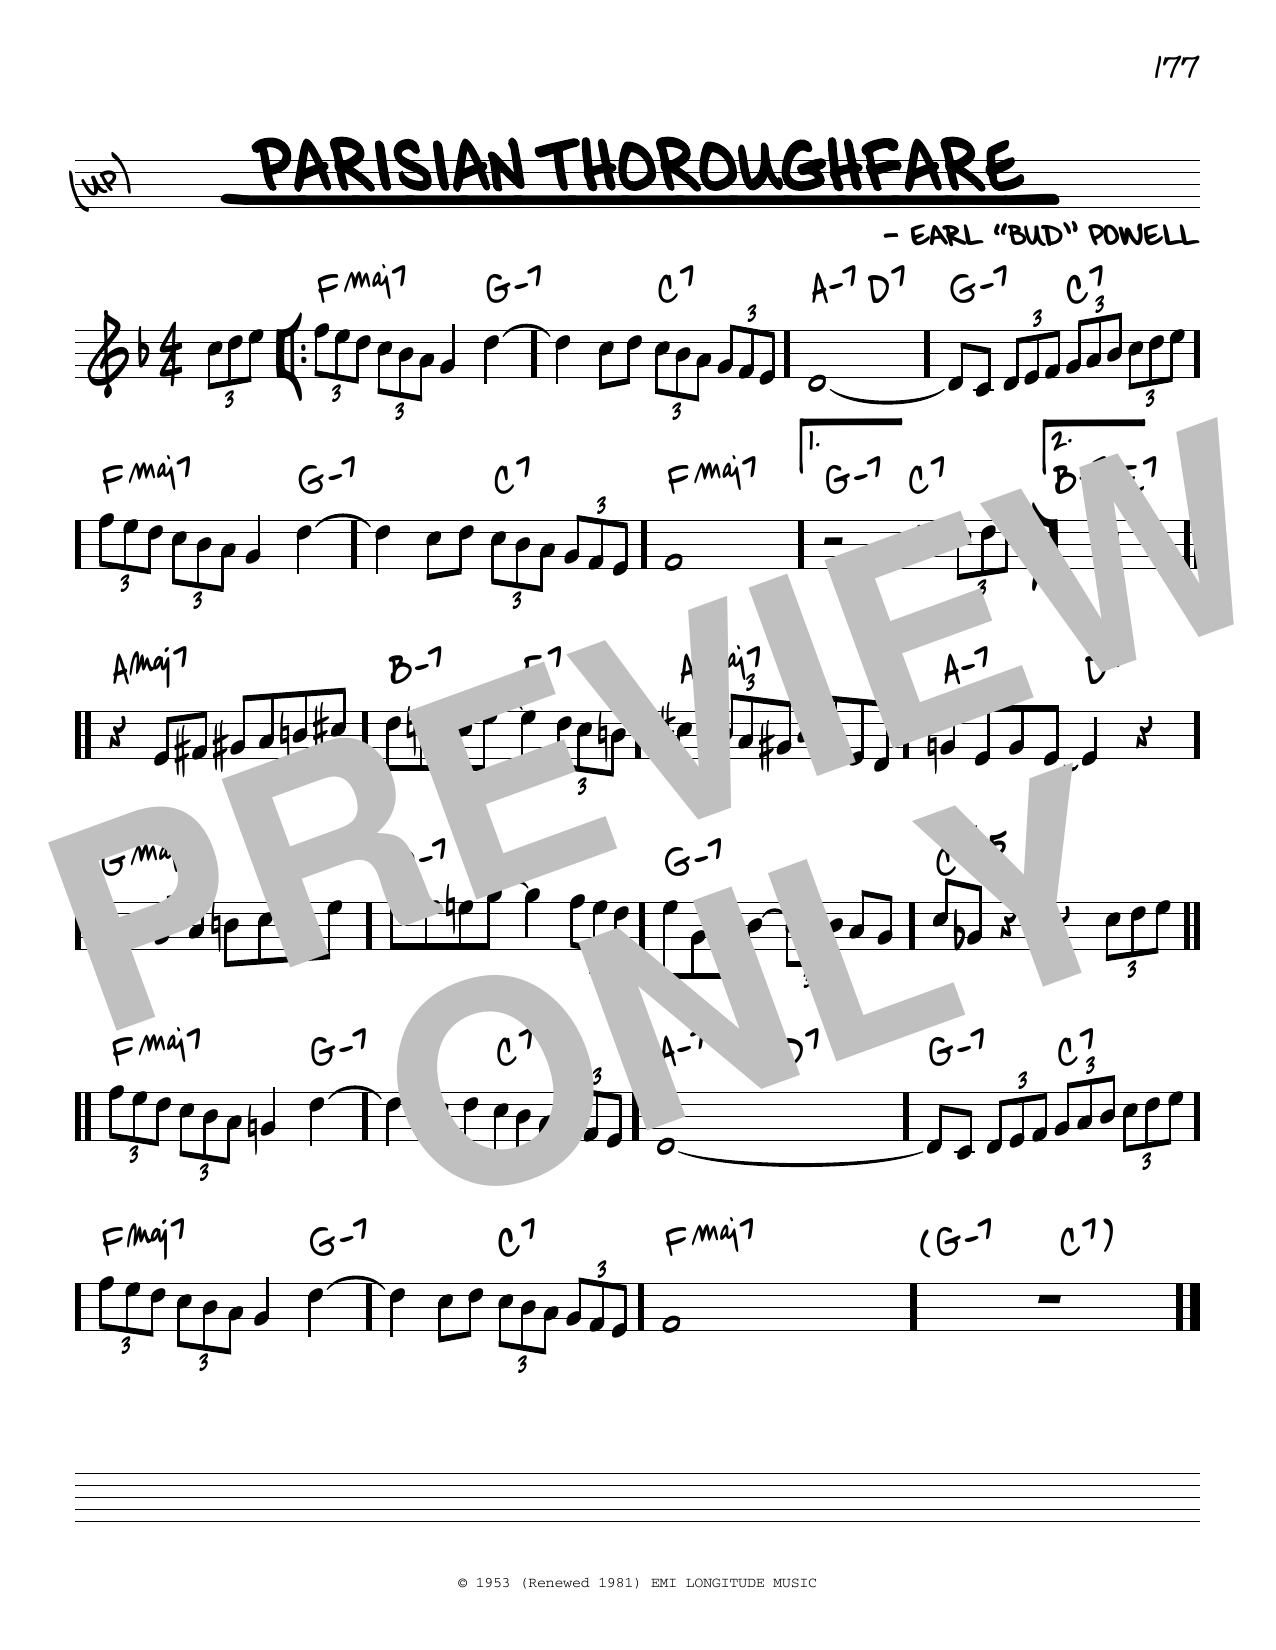 Download Bud Powell Parisian Thoroughfare Sheet Music